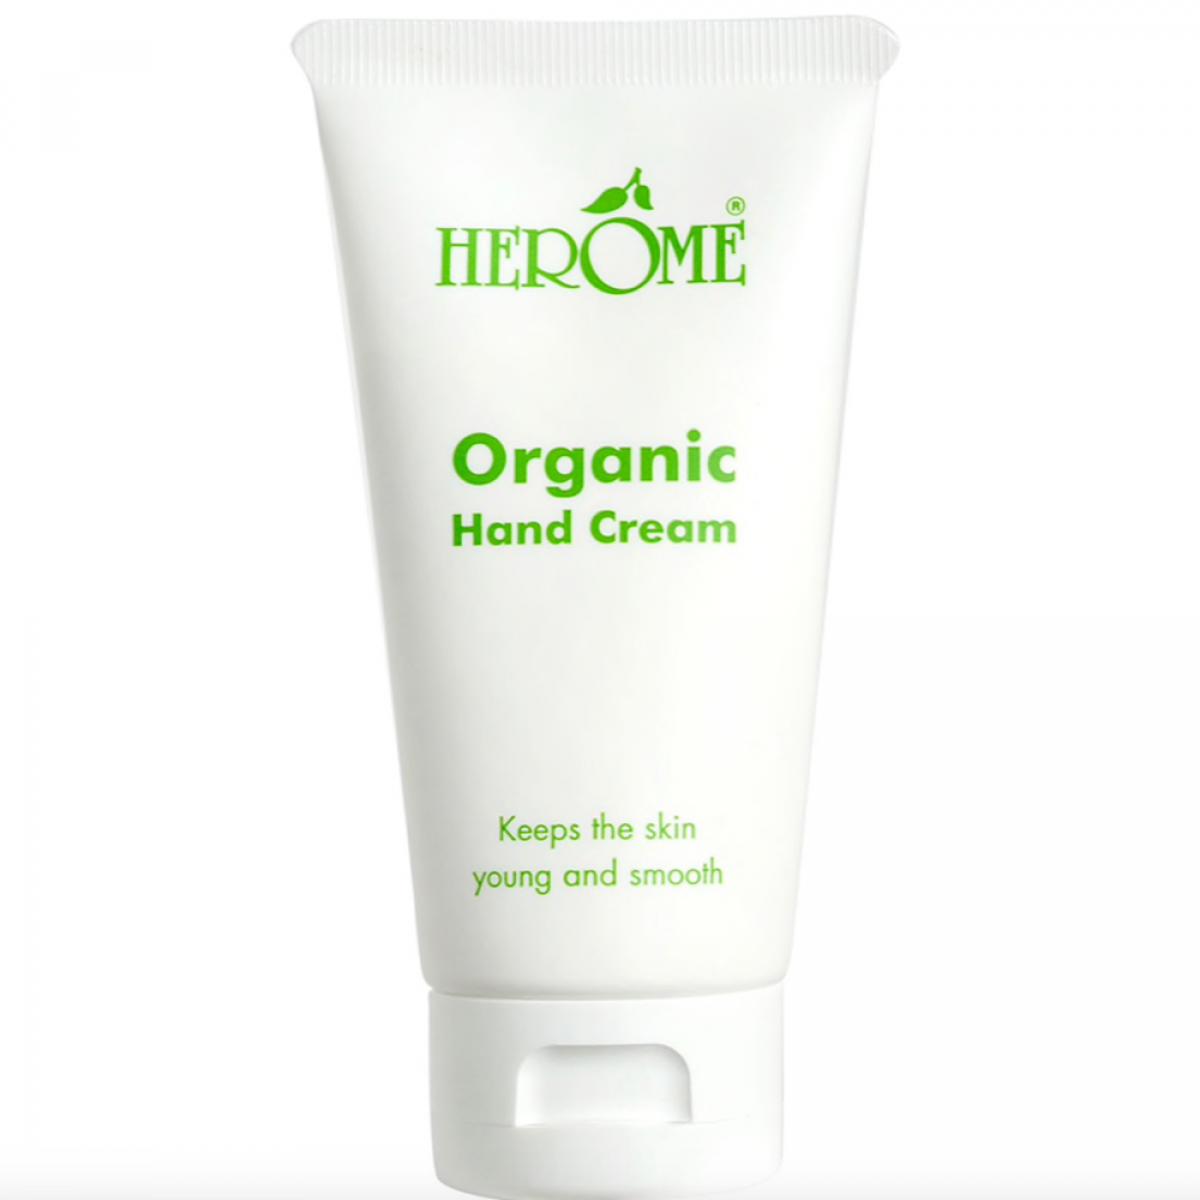 Herôme organic hand cream